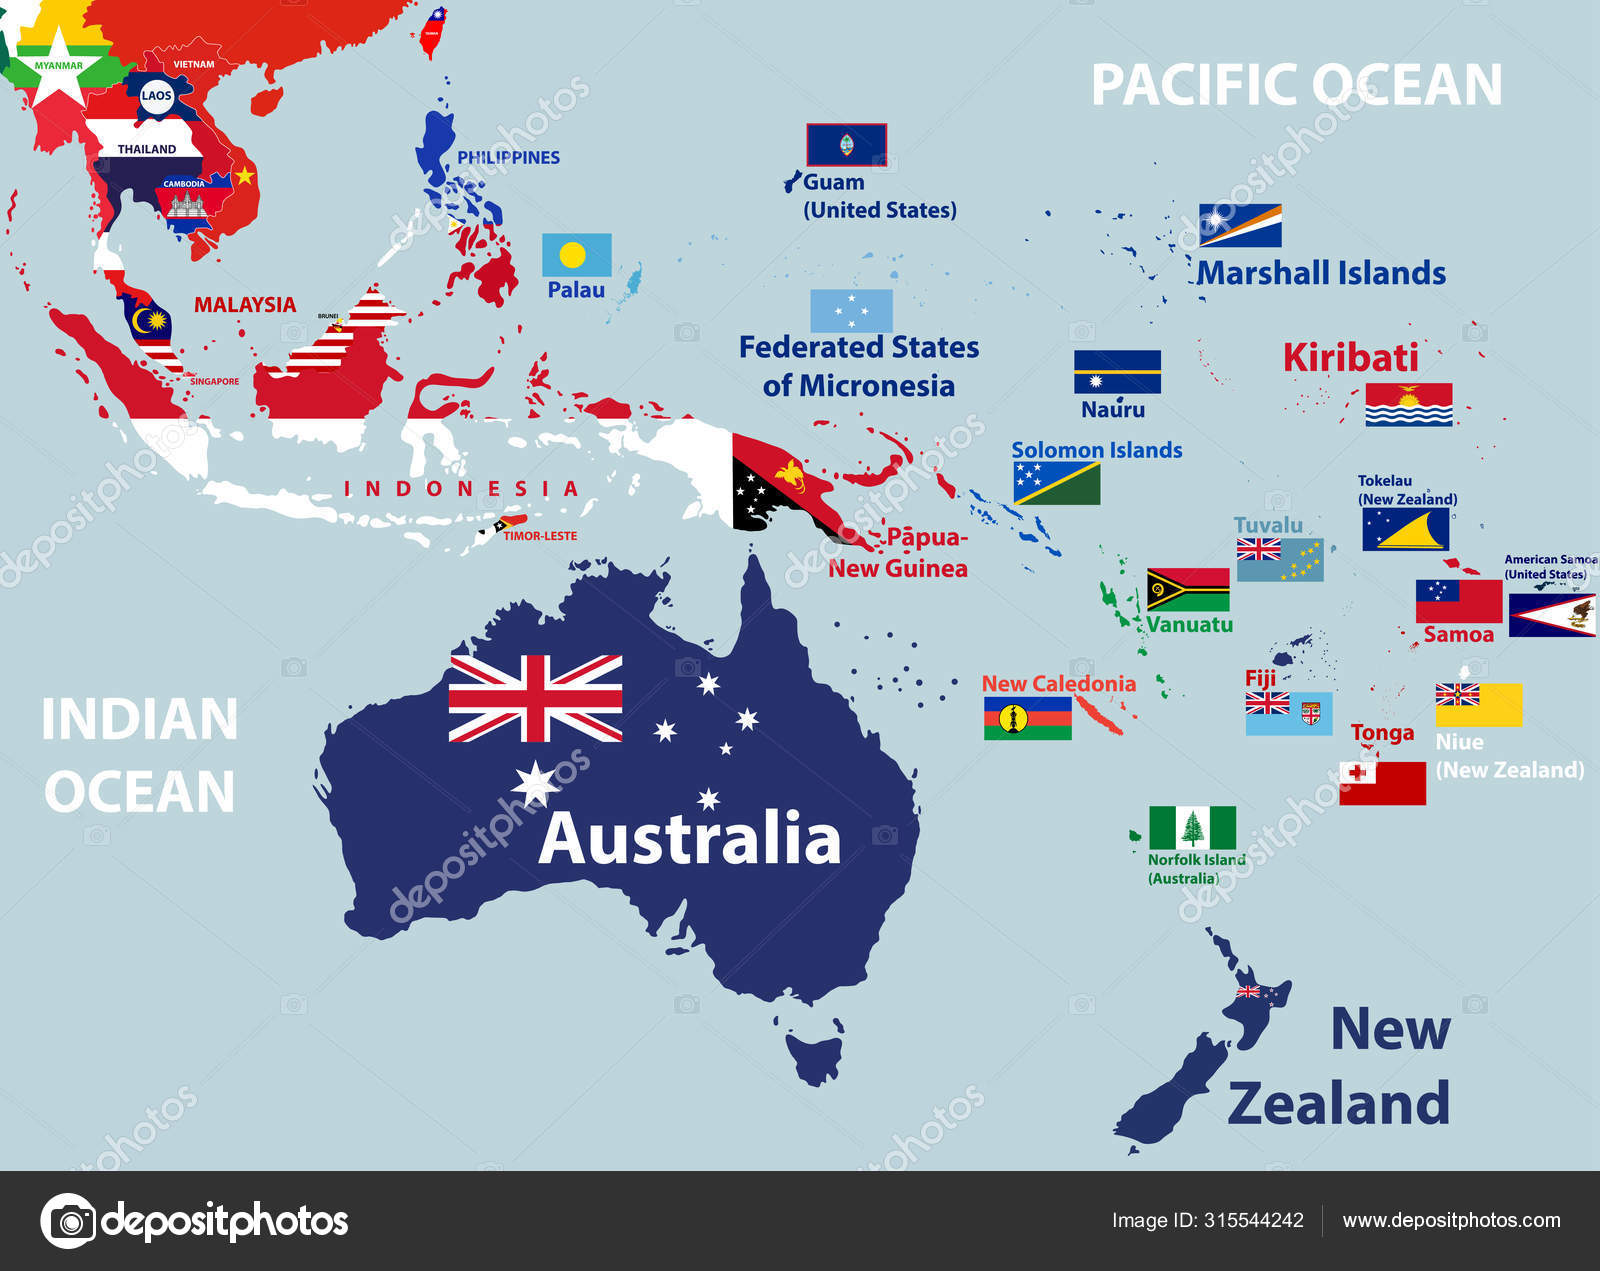 depositphotos_315544242-stock-illustration-vector-map-australia-oceania-south.jpg